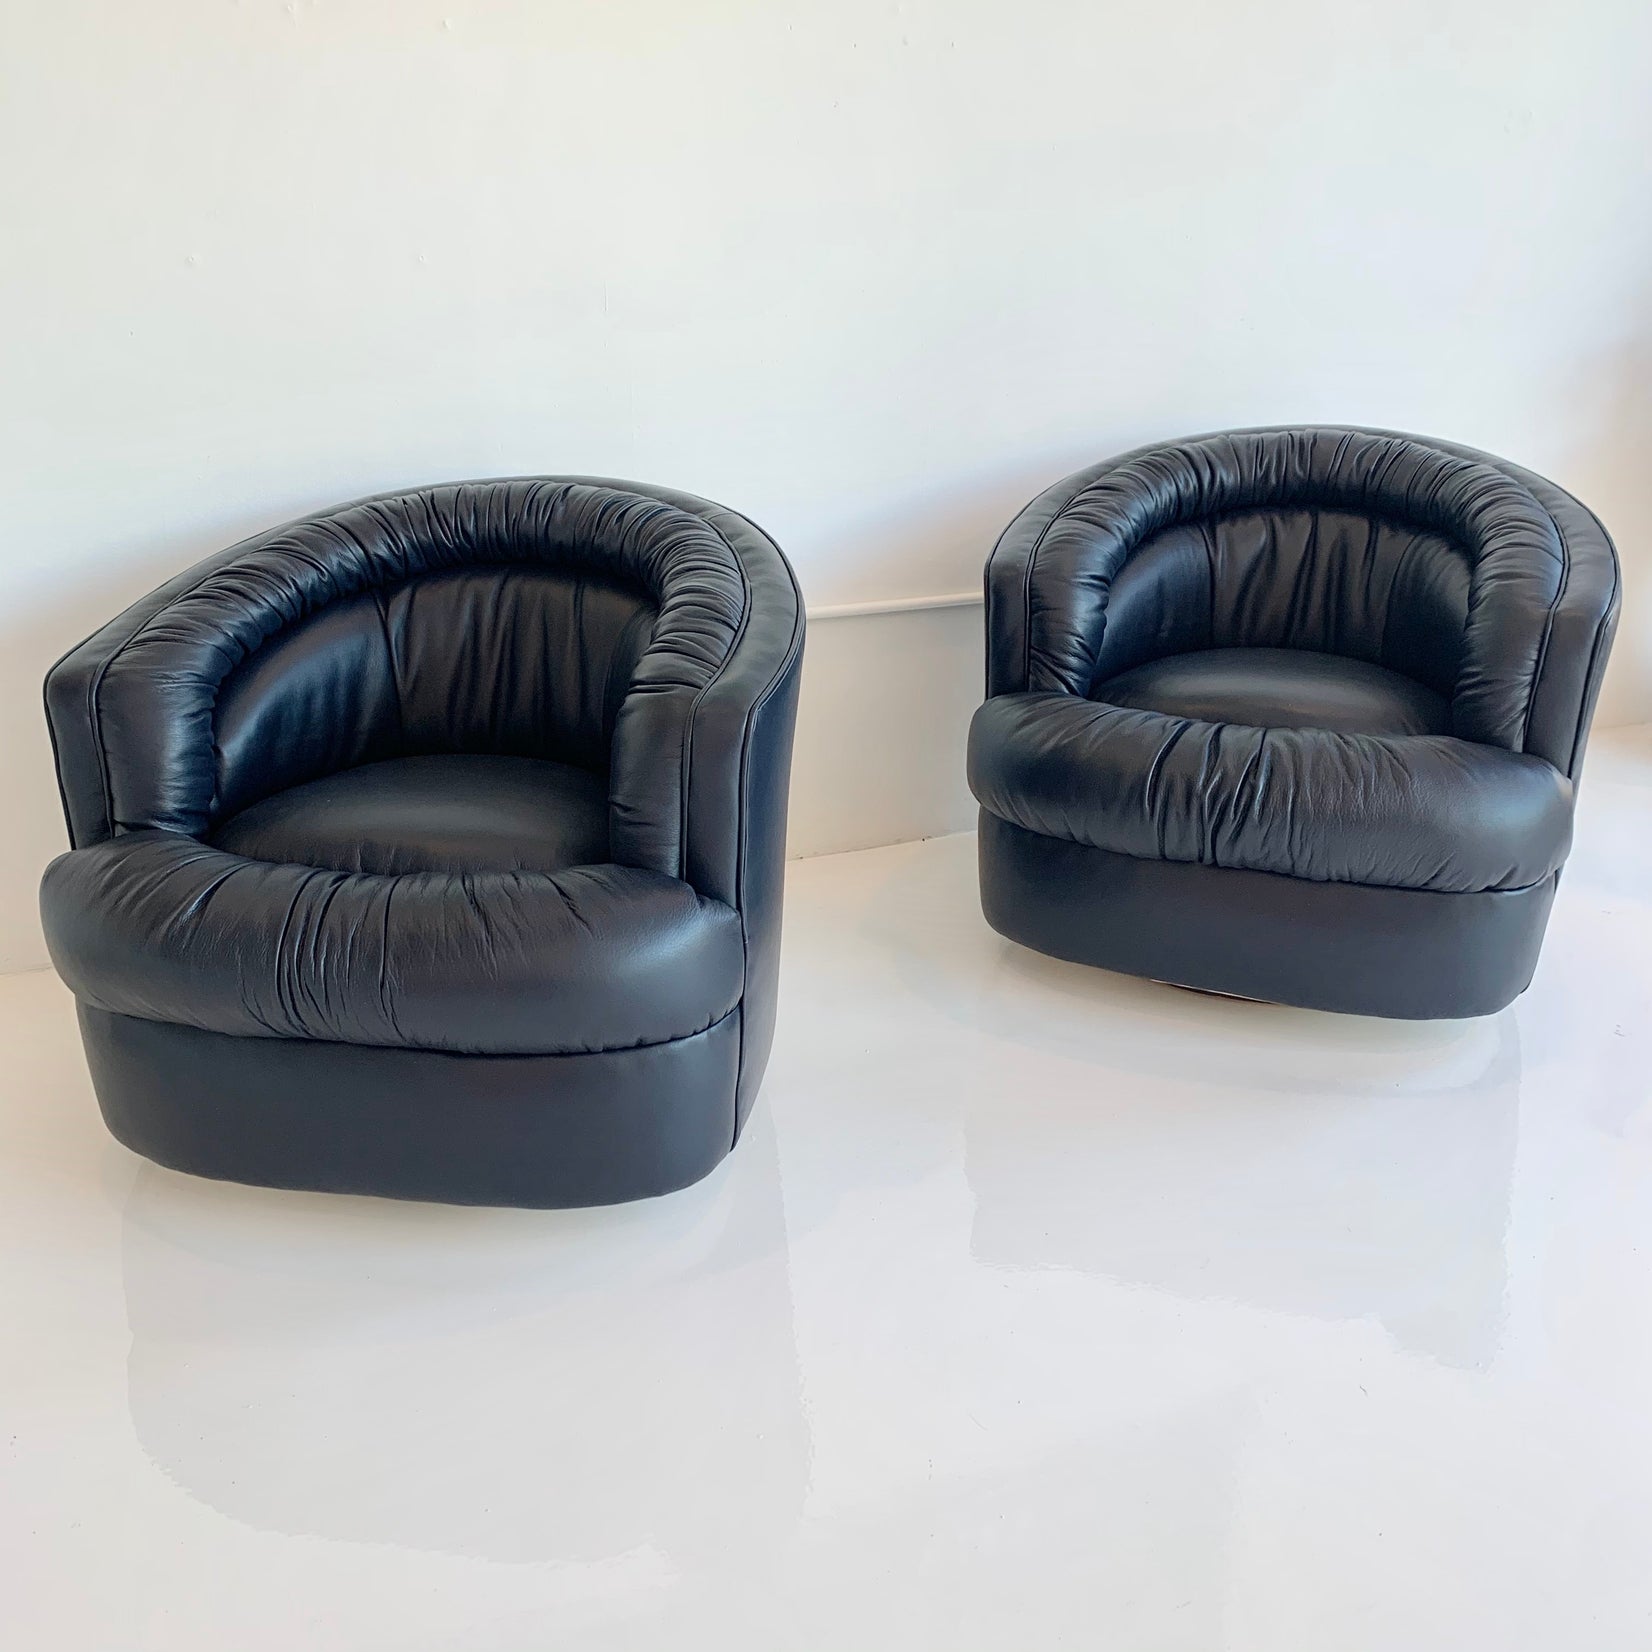 Malibu Swivel Chairs by Merit Los Angeles